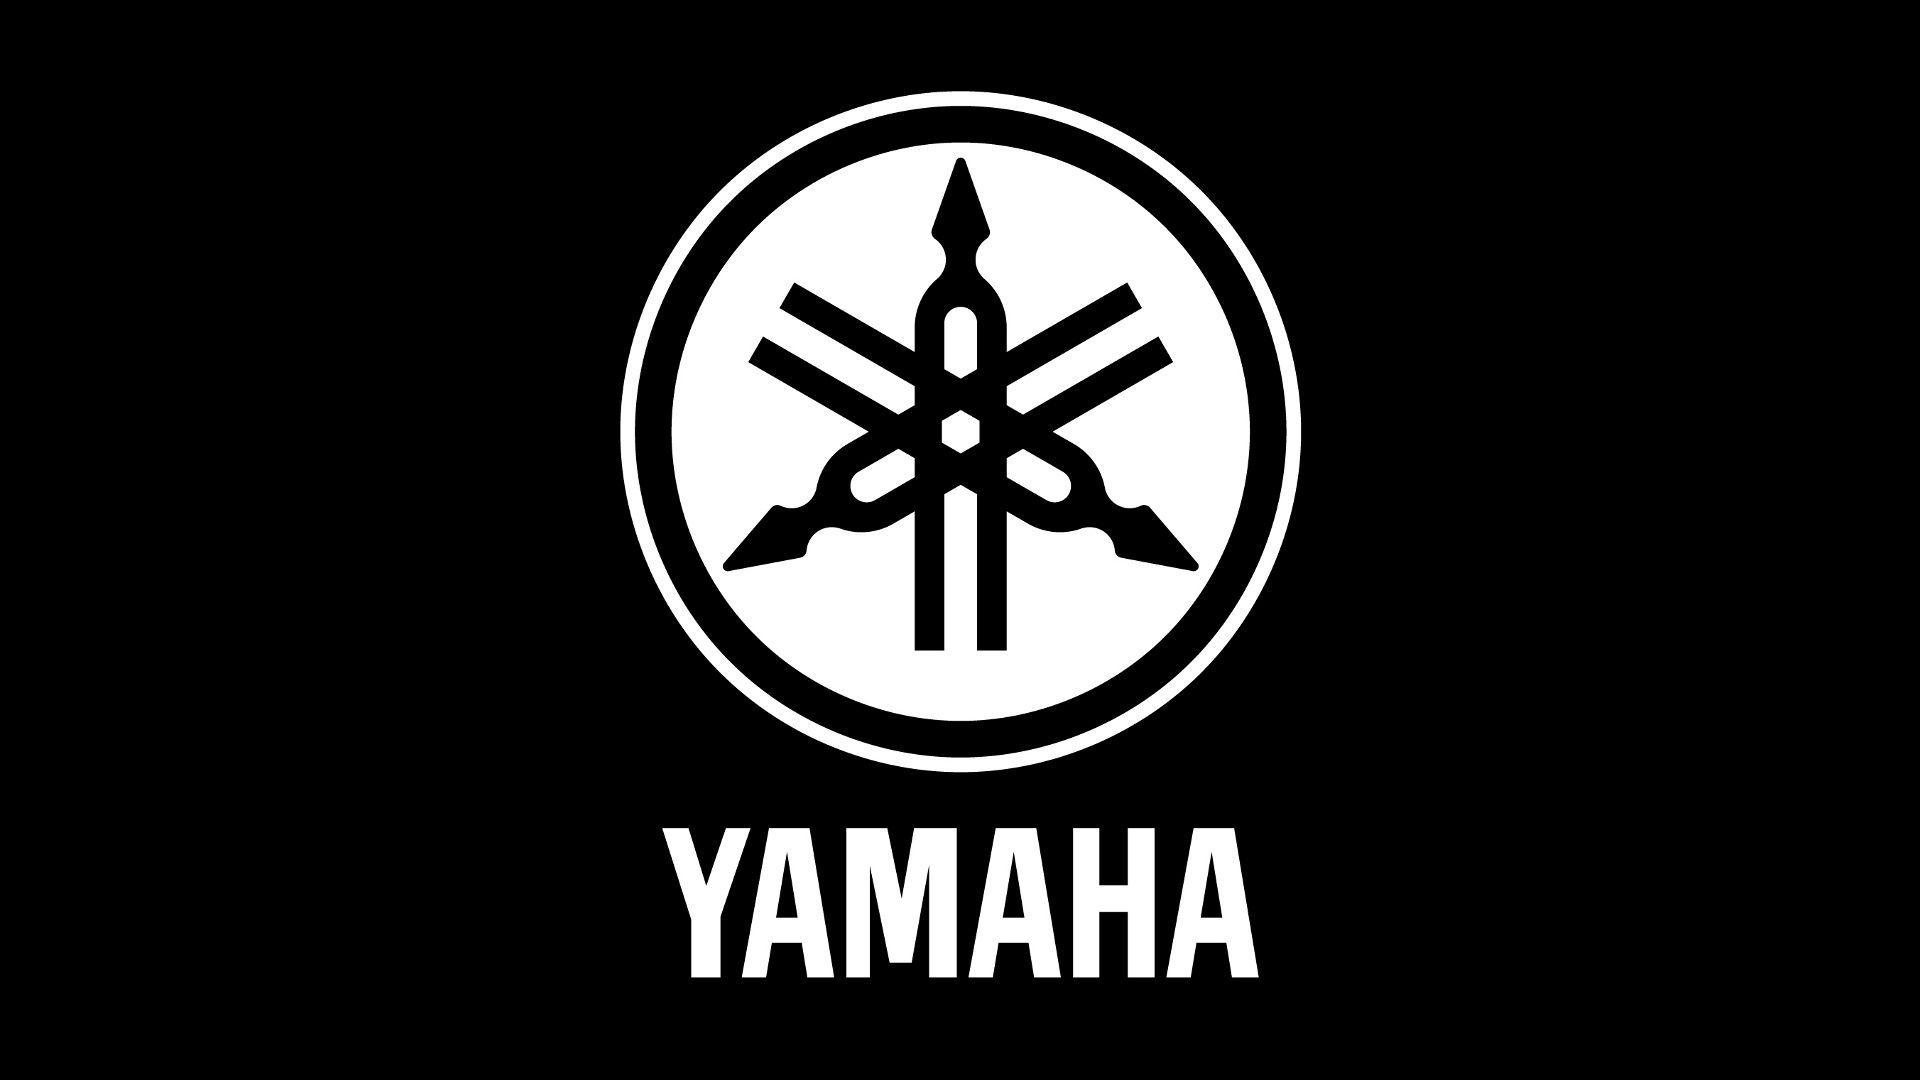 Cool Yamaha Logo - YAMAHA LOGO. Cool Stuff. Yamaha logo, Yamaha, Yamaha motorcycles